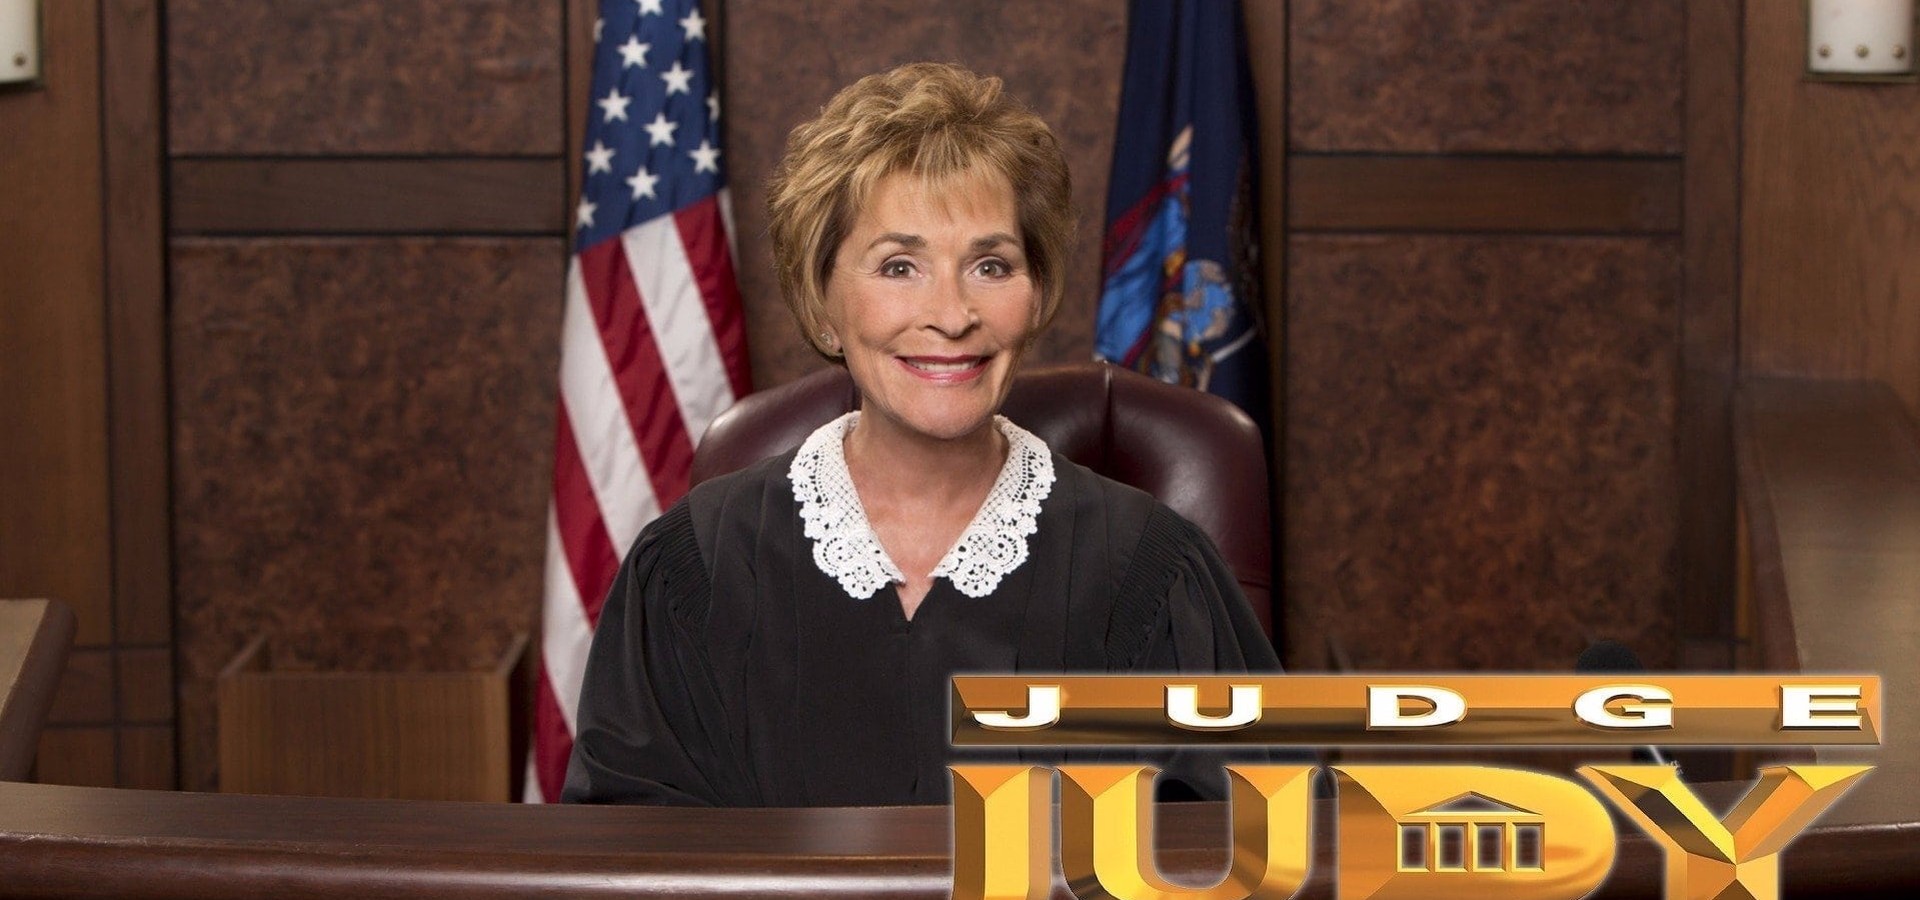 Judge Judy Season 25 watch full episodes streaming online